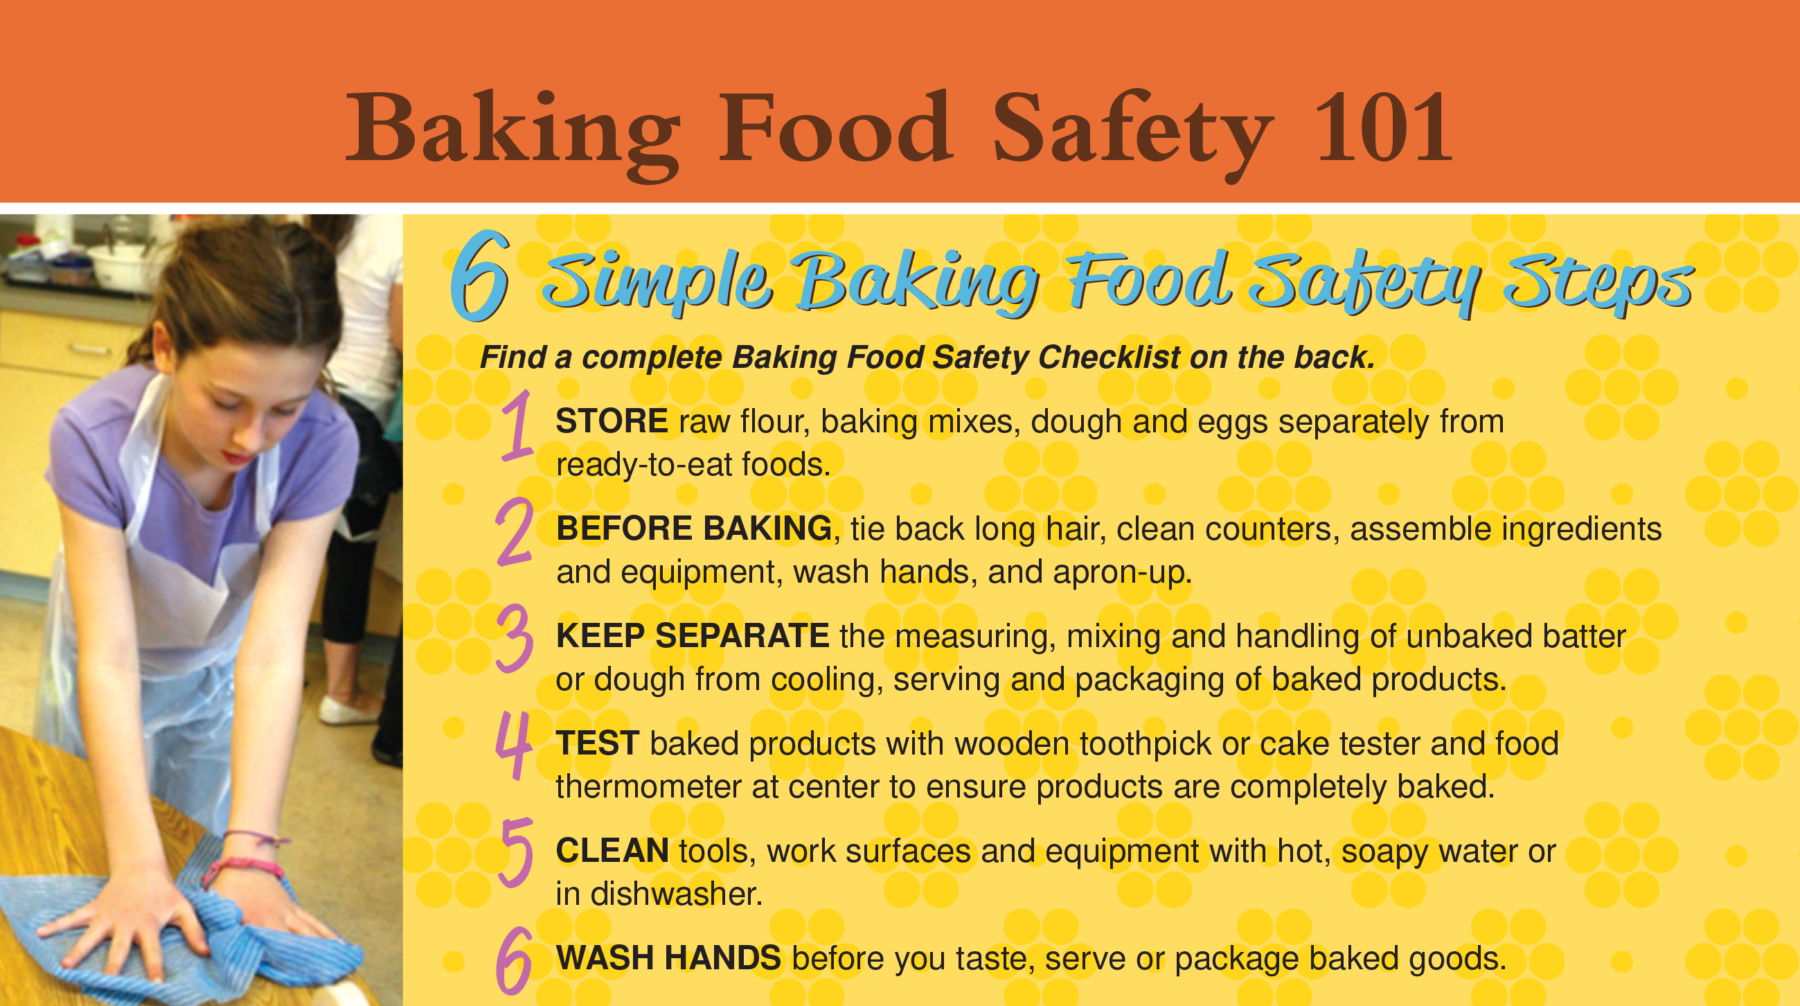 Image: Baking Food Safety 101.